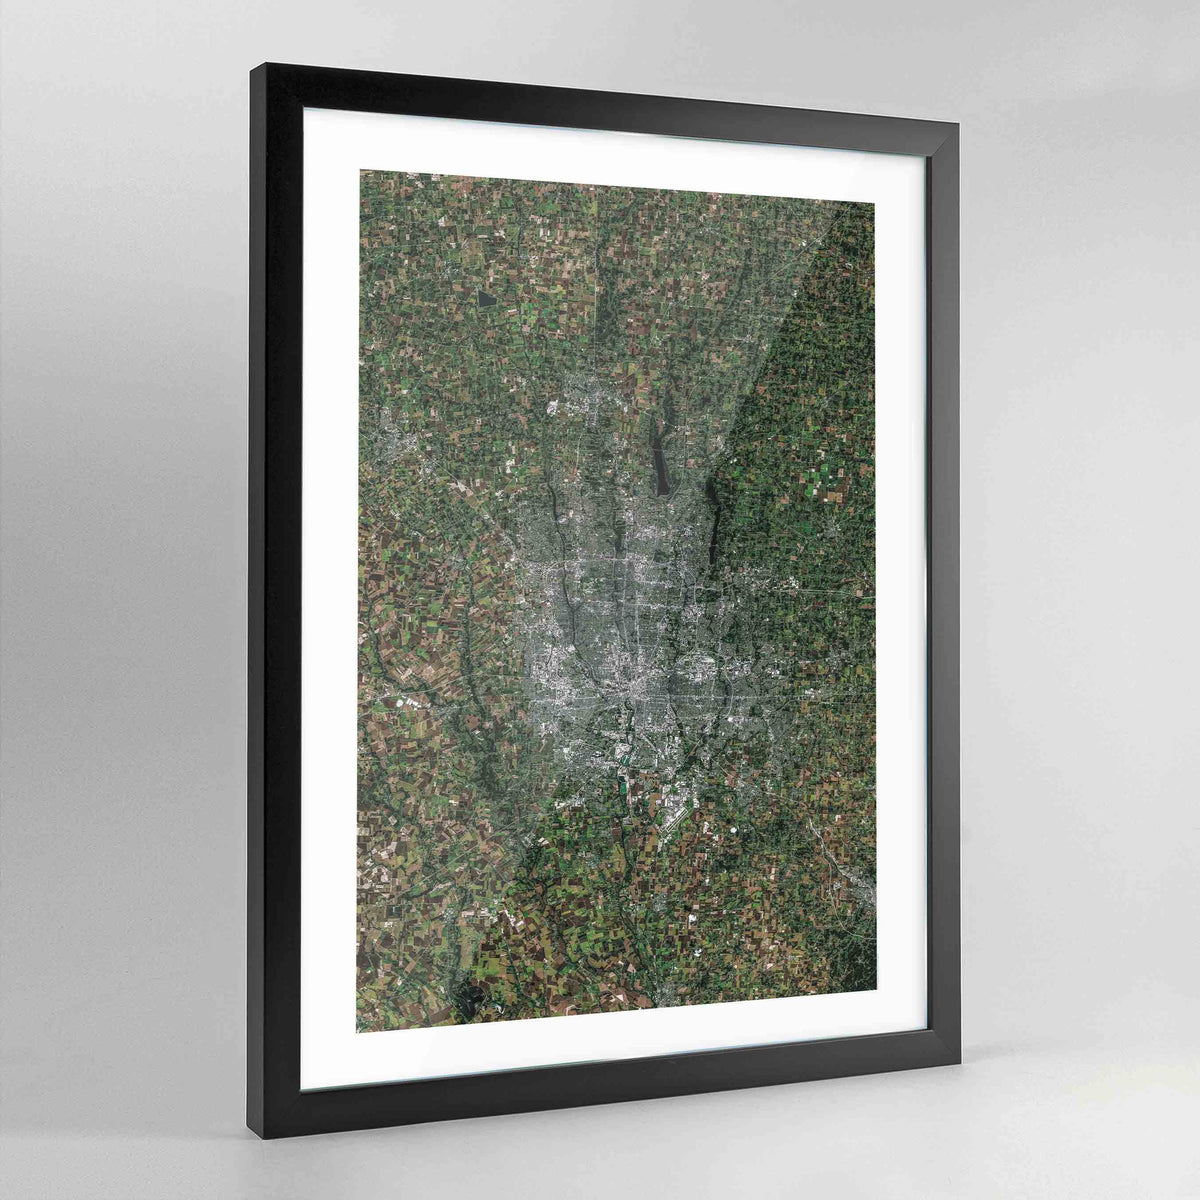 Columbus Earth Photography Art Print - Framed